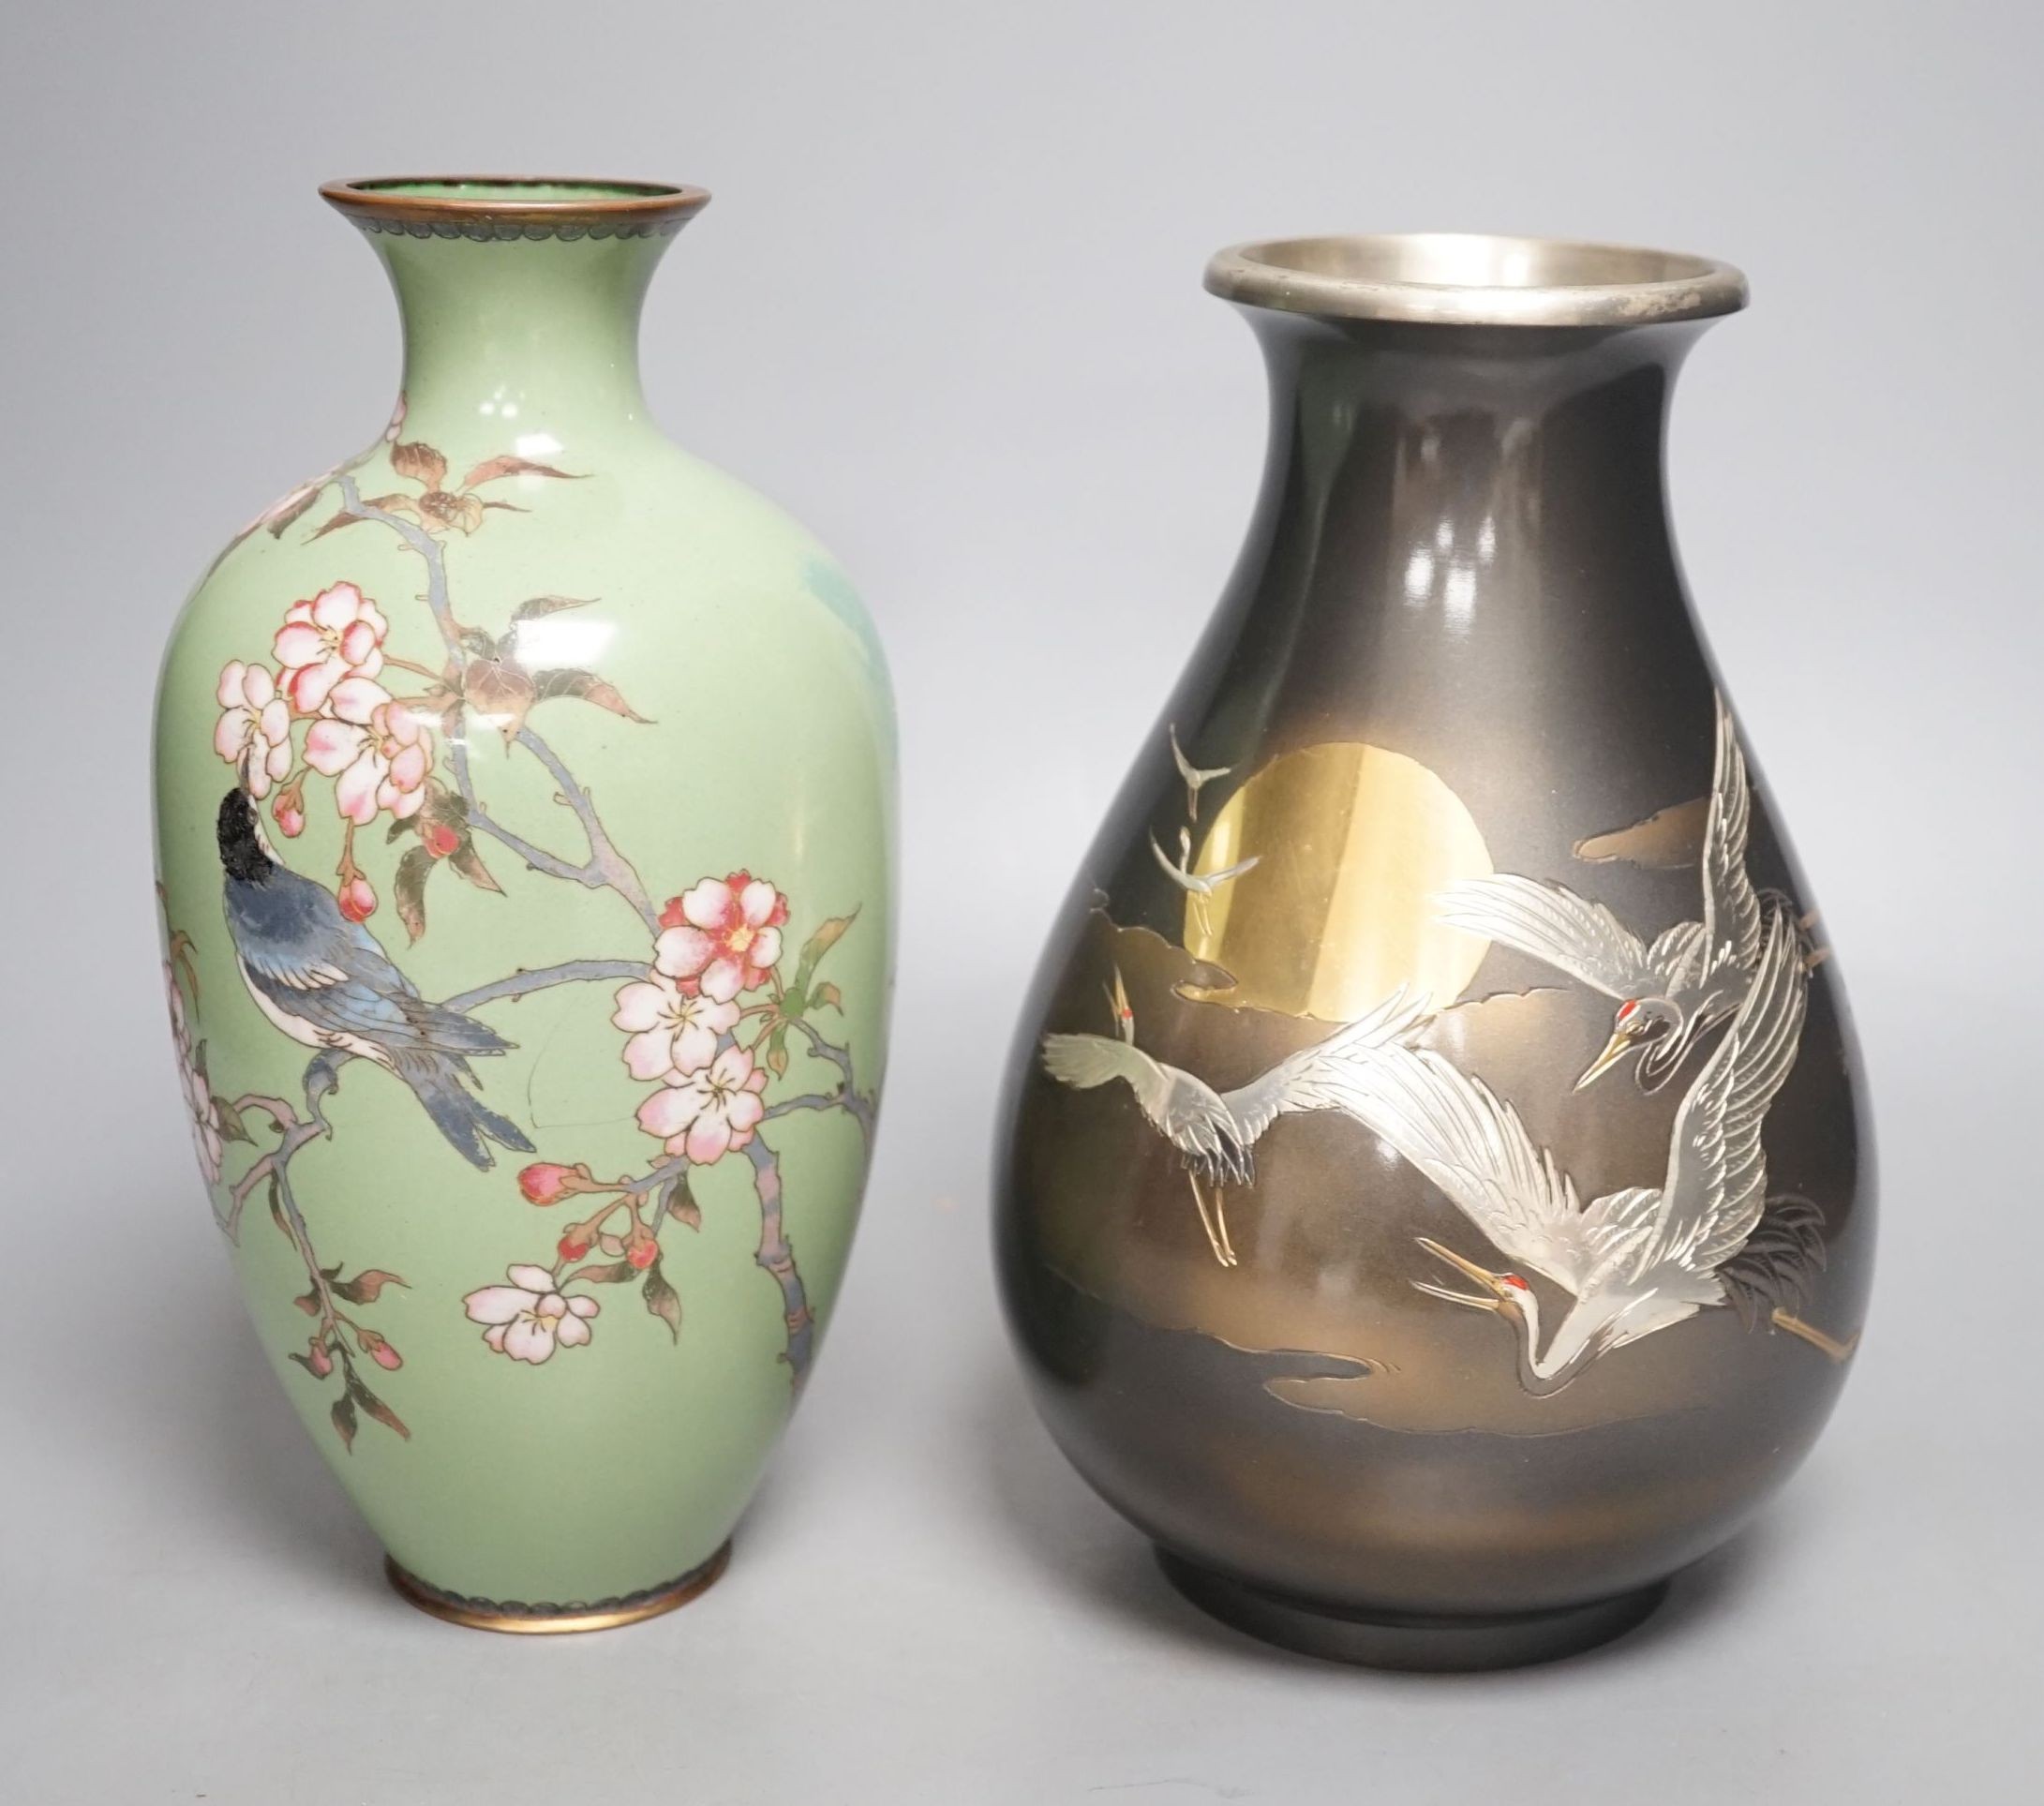 A Japanese cloisonné enamel vase and a Japanese mixed metal vase, cloisonné vase 25 cms high.